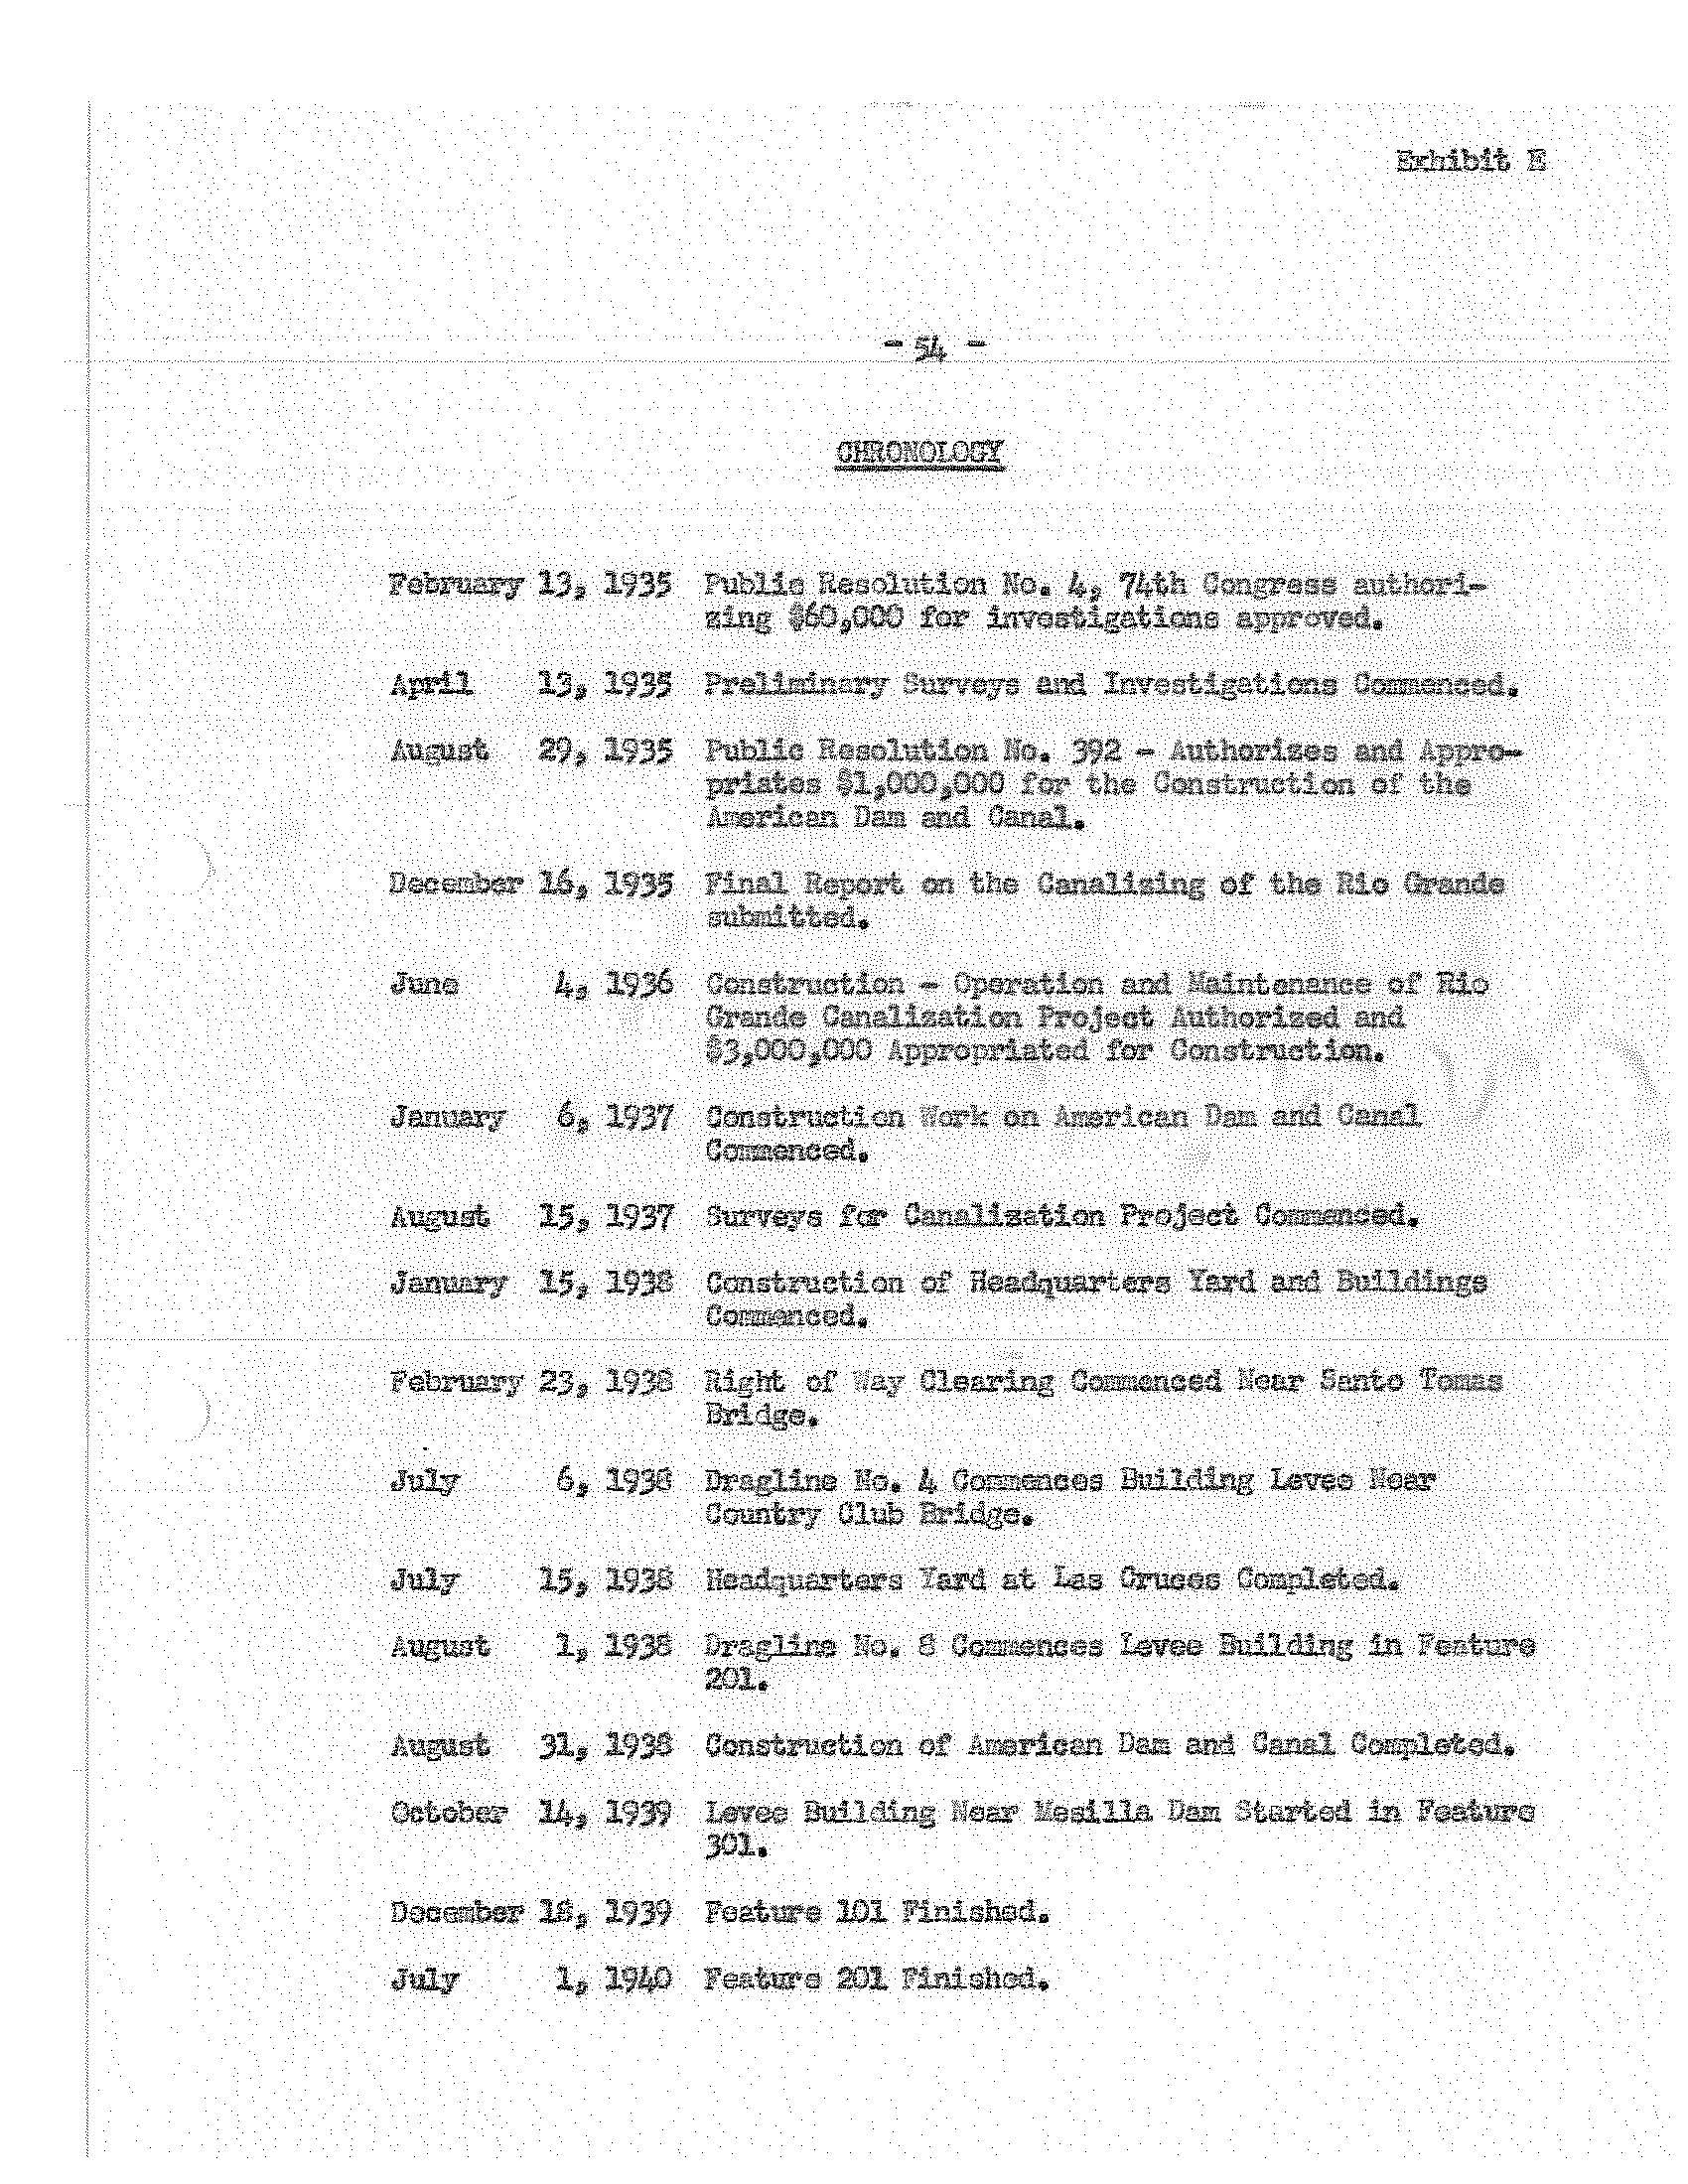 Canalization Chronology ~ February 13, 1935-July 1, 1940